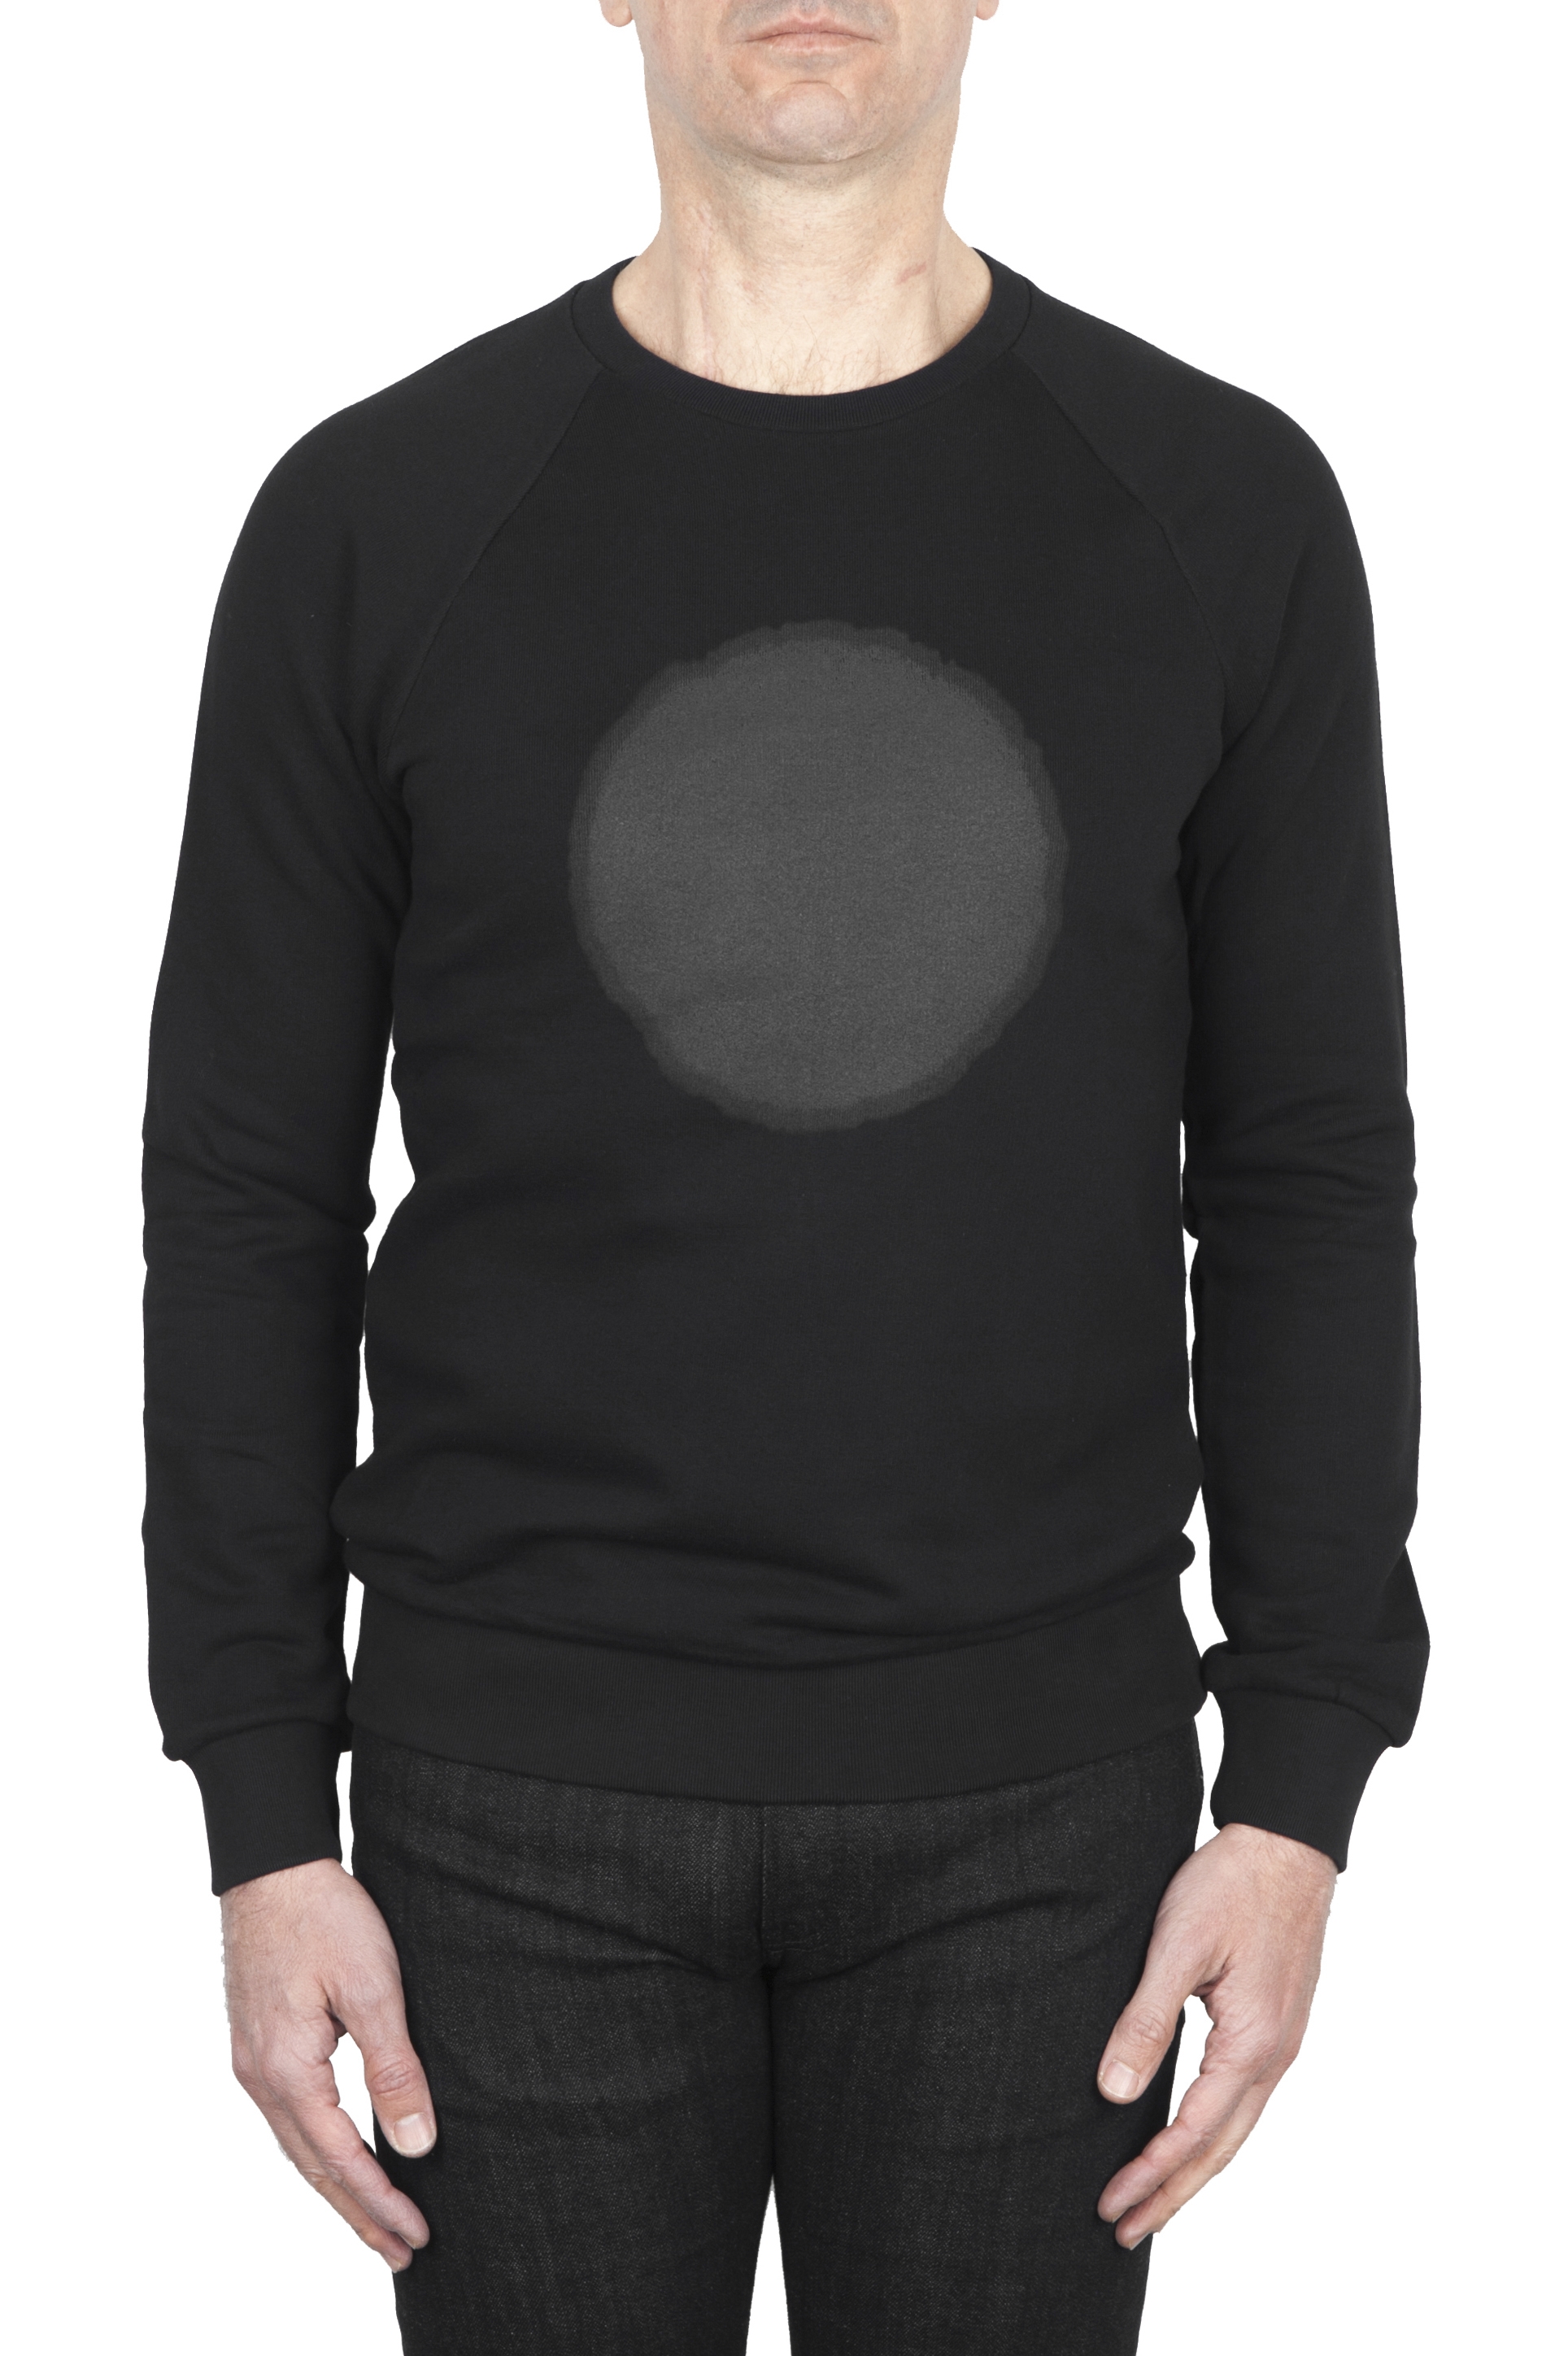 SBU 01797 Hand printed crewneck black sweatshirt 01